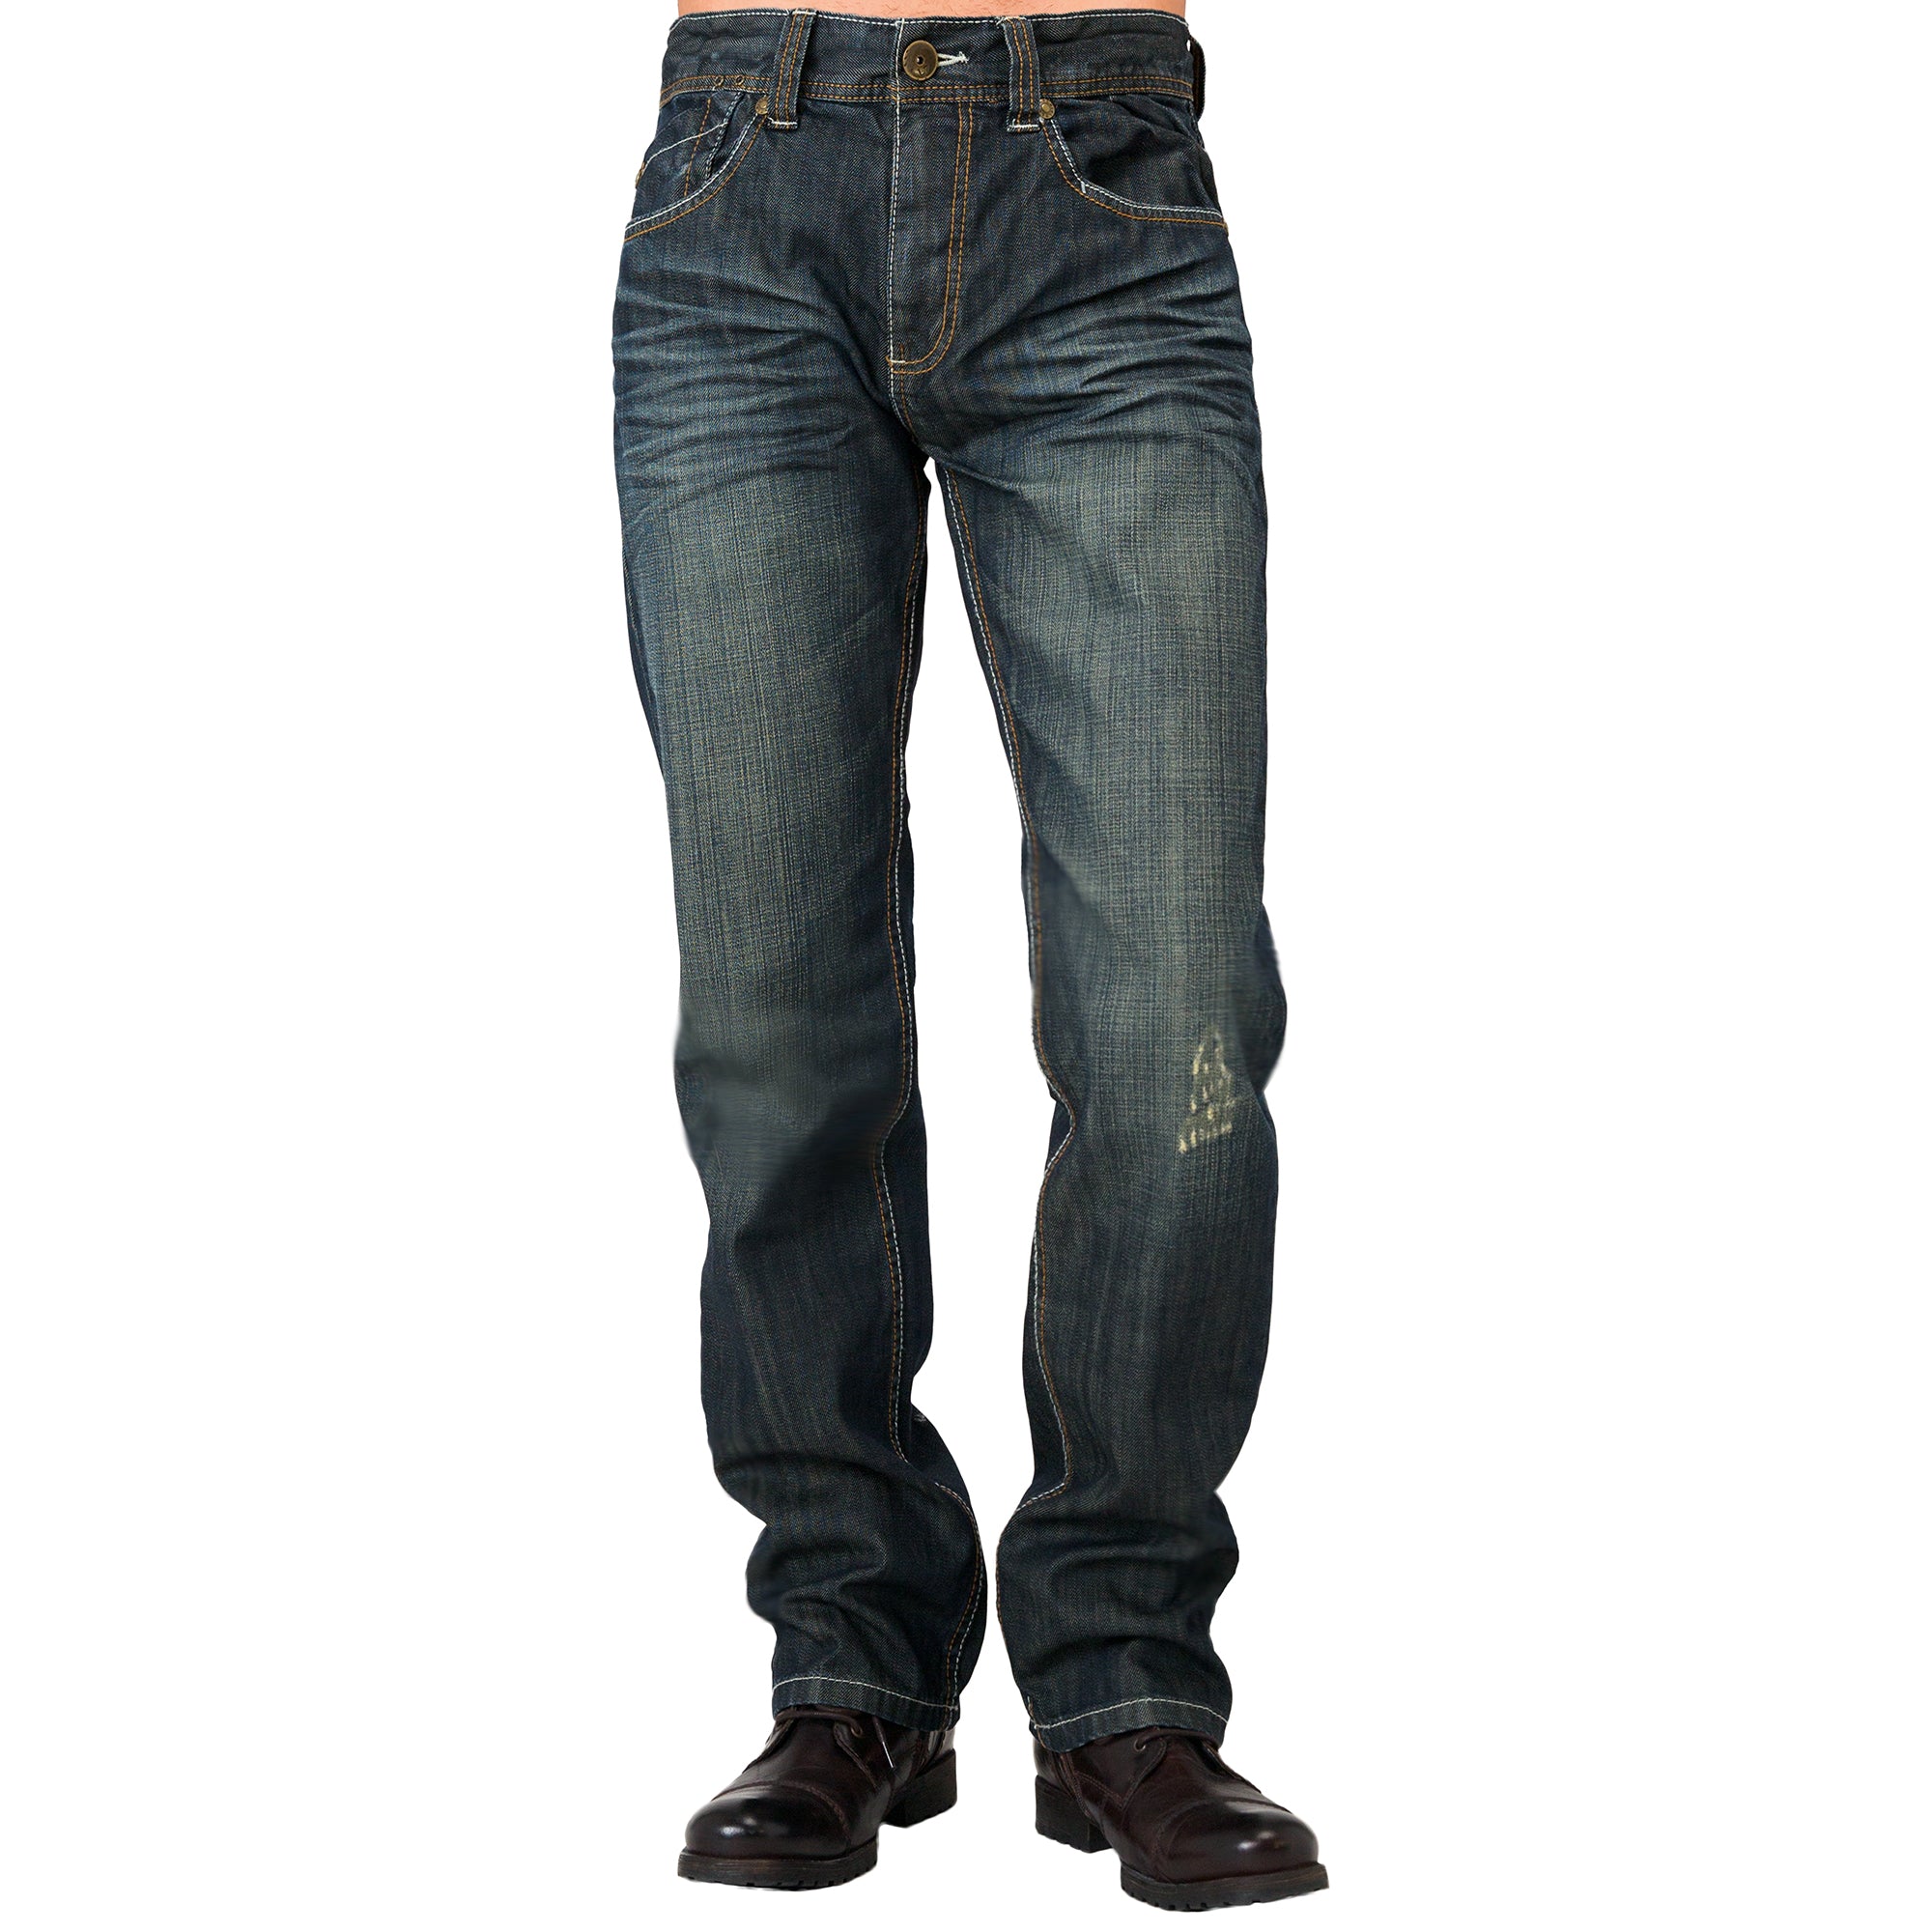 Loose Jeans - Dark denim blue - Men | H&M IN